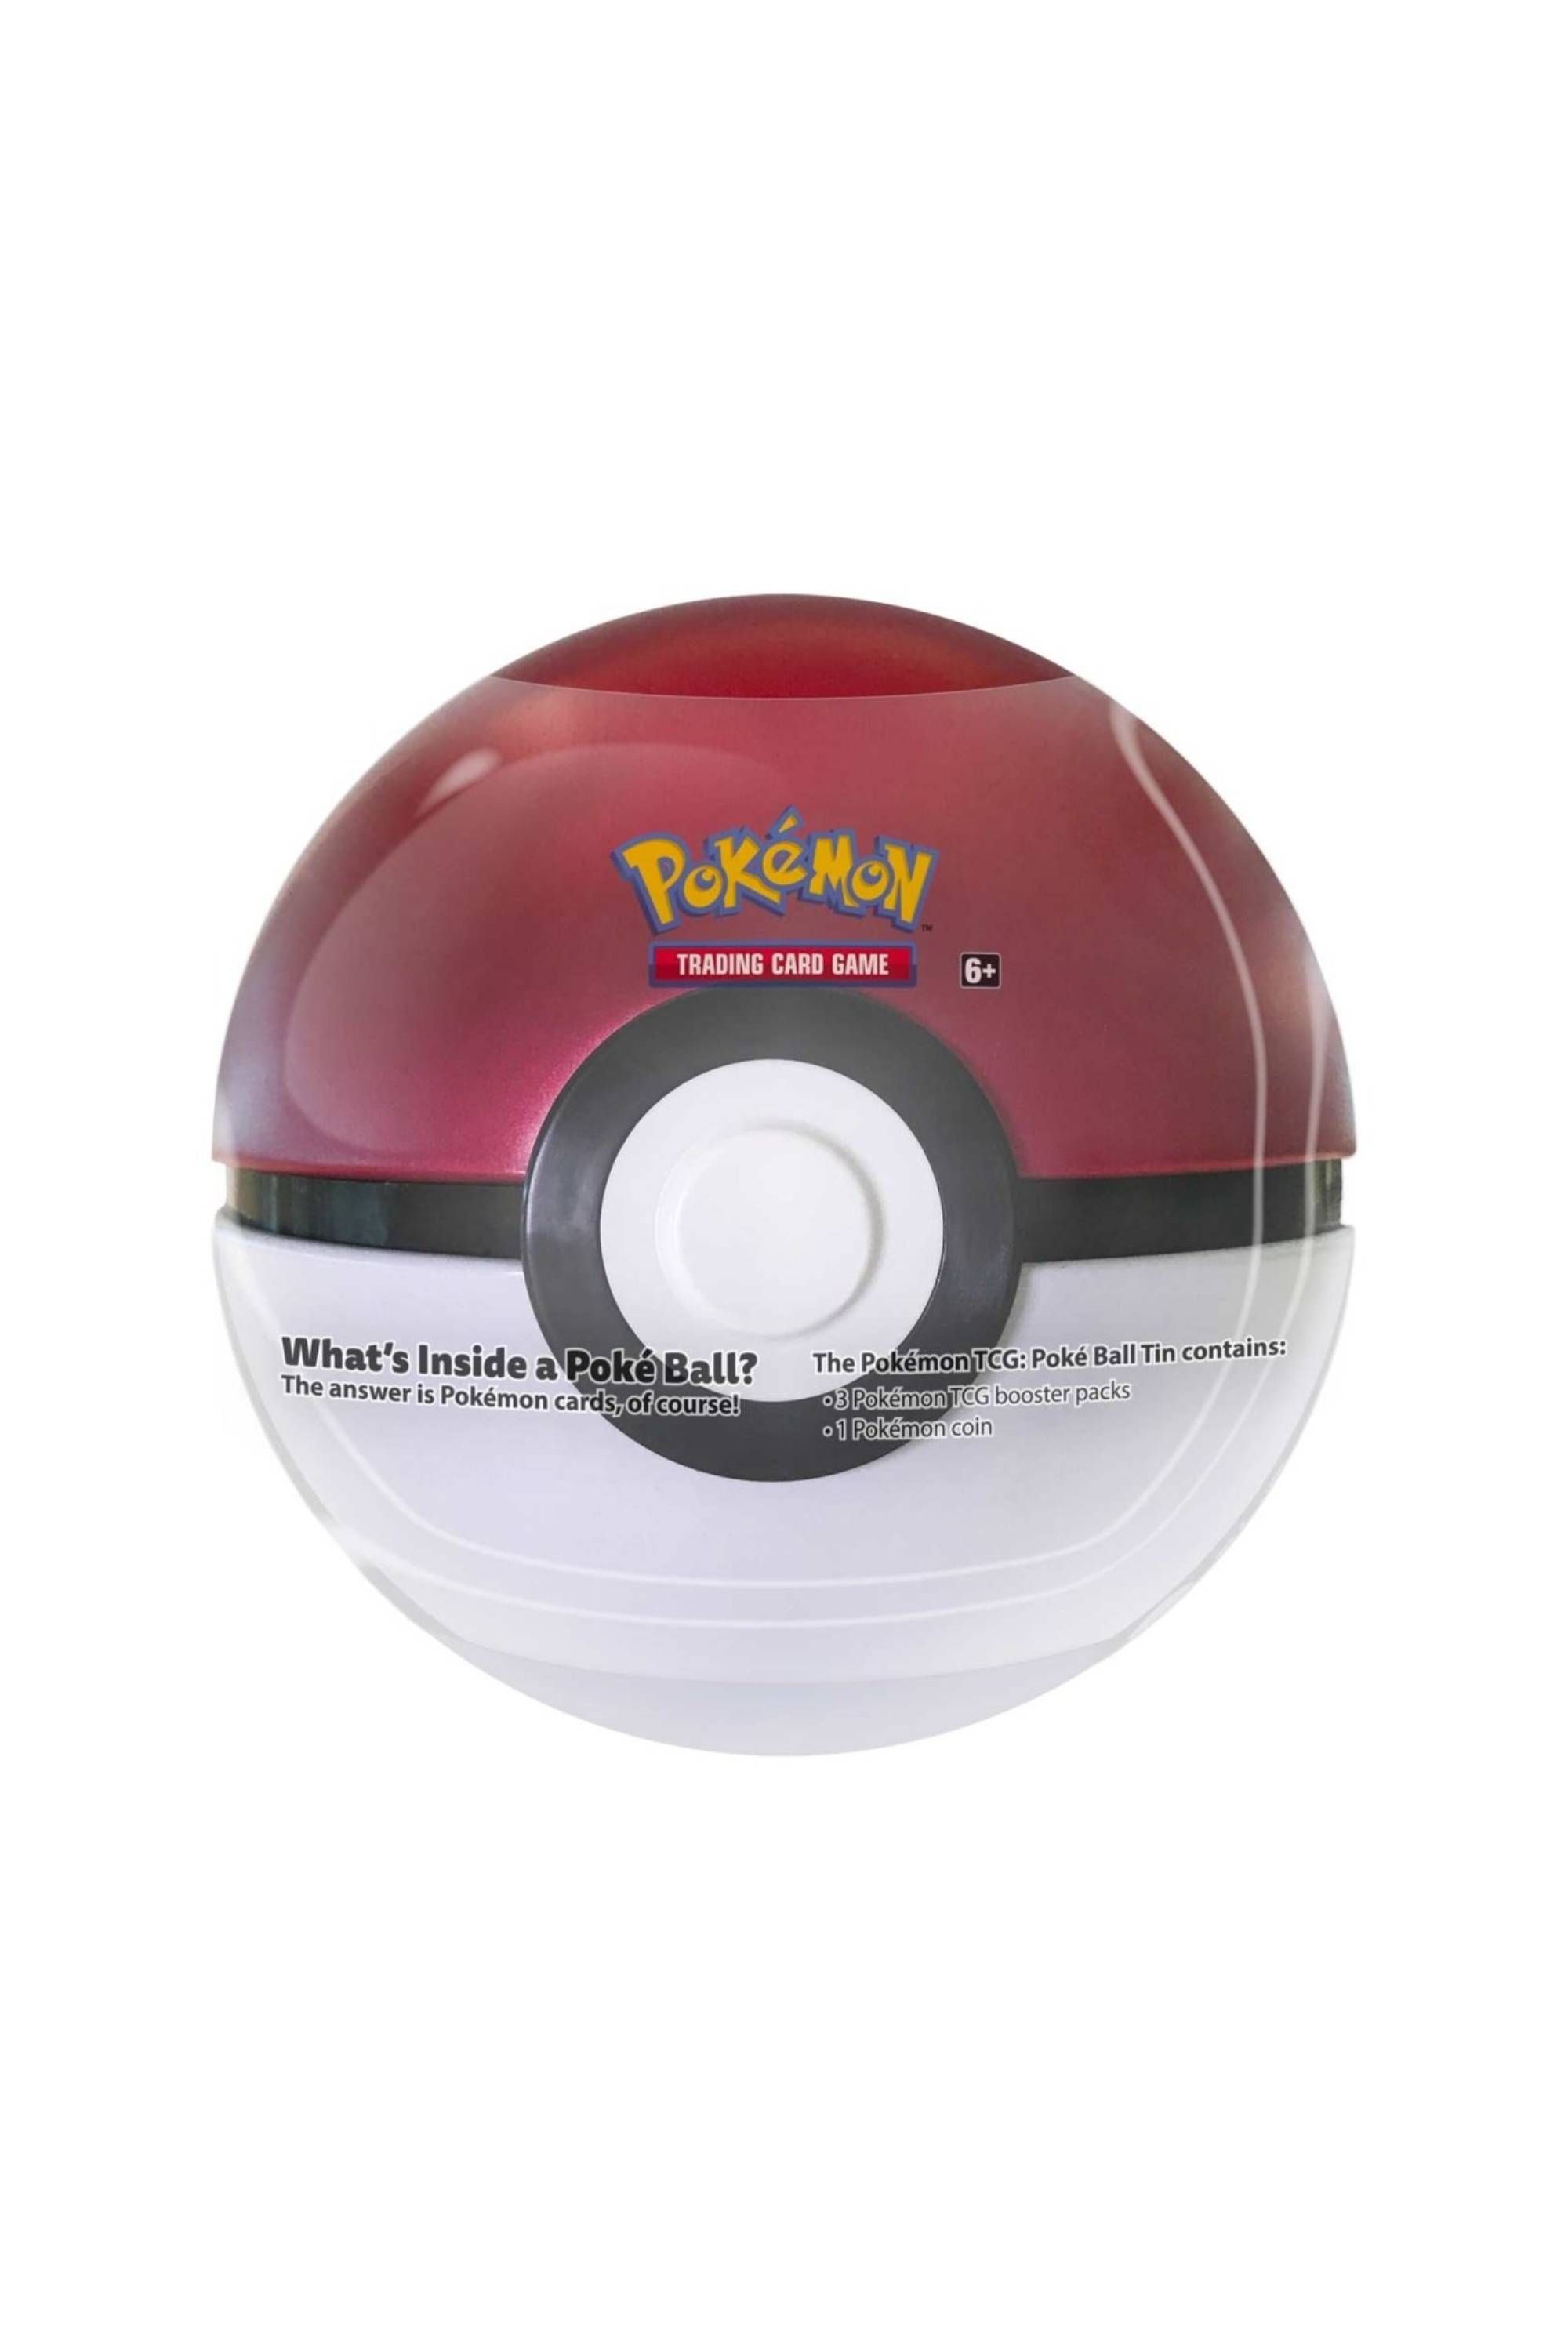 Pokémon Collector's Chest + Pokeball + Premier Ball + 3 Eevee Promo Cards